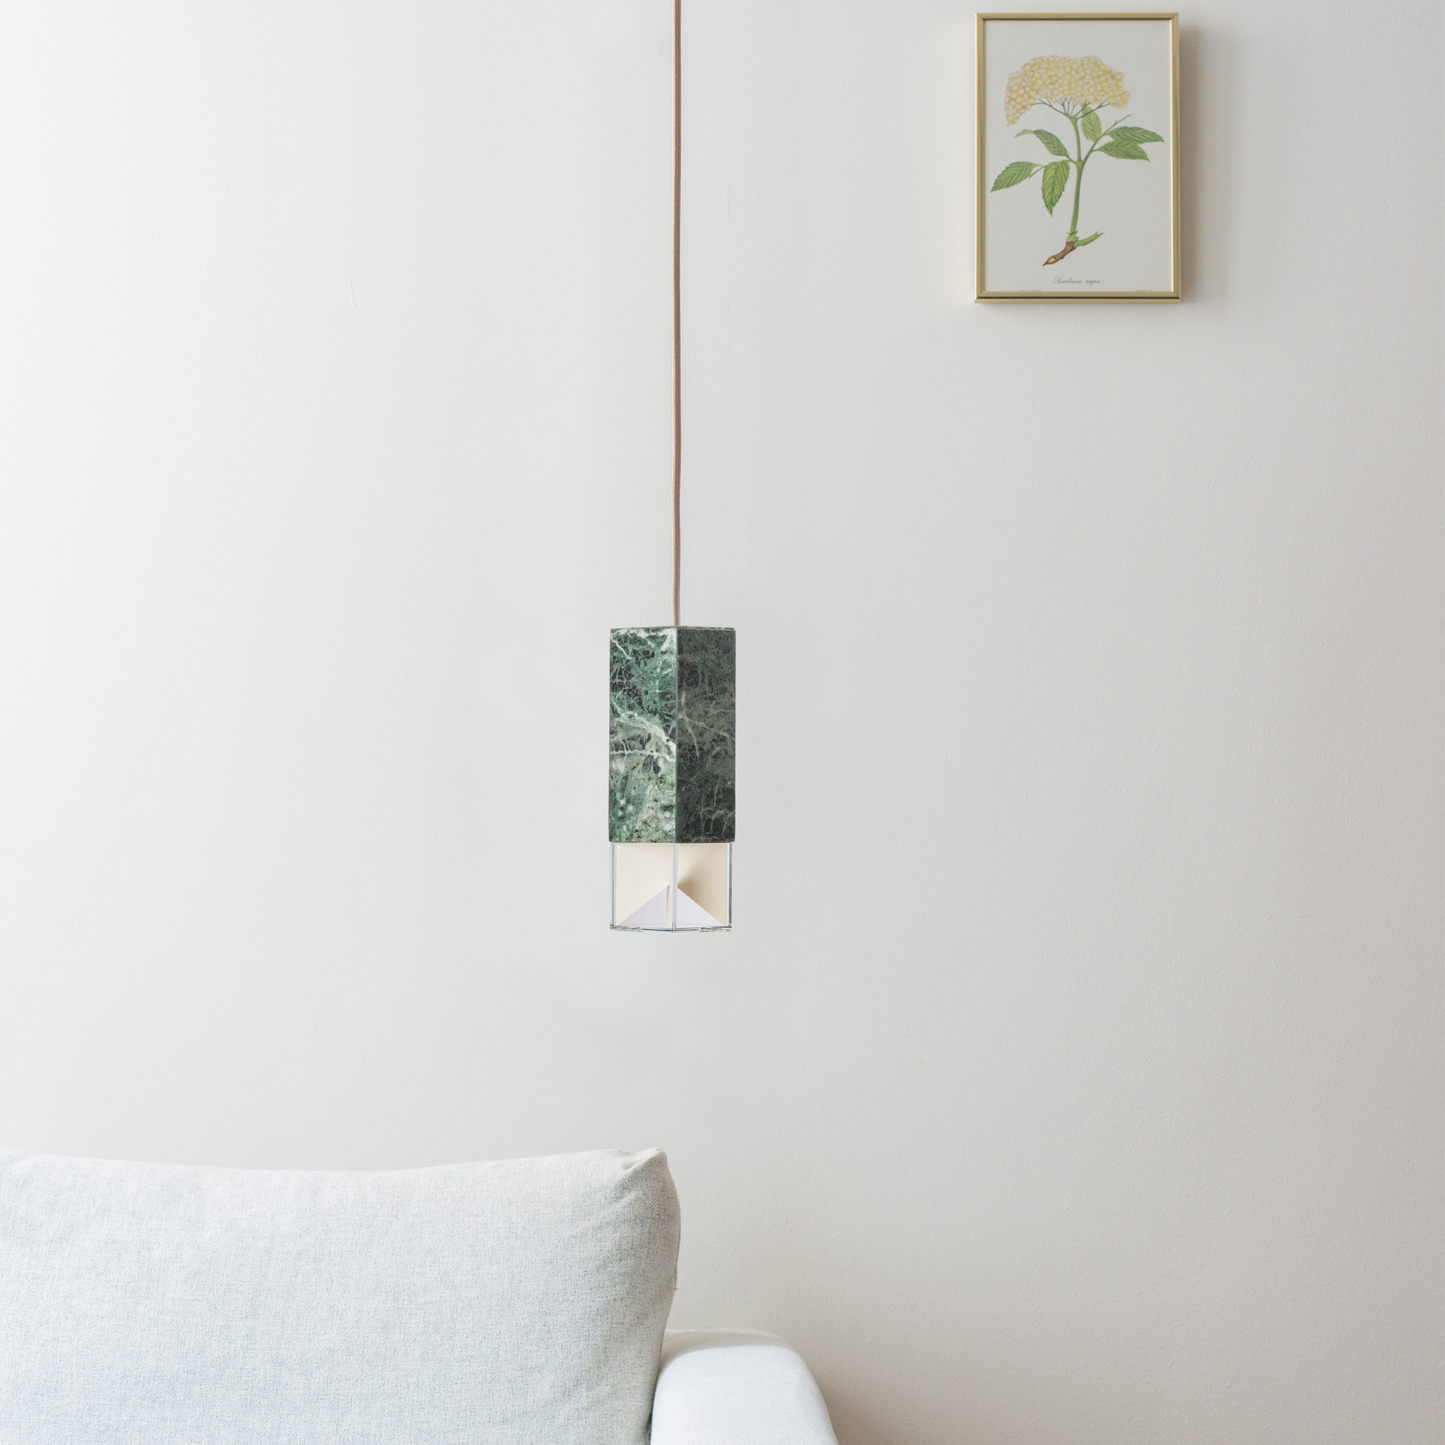 Lamp One Pendant Light / Green, hanging in living room.